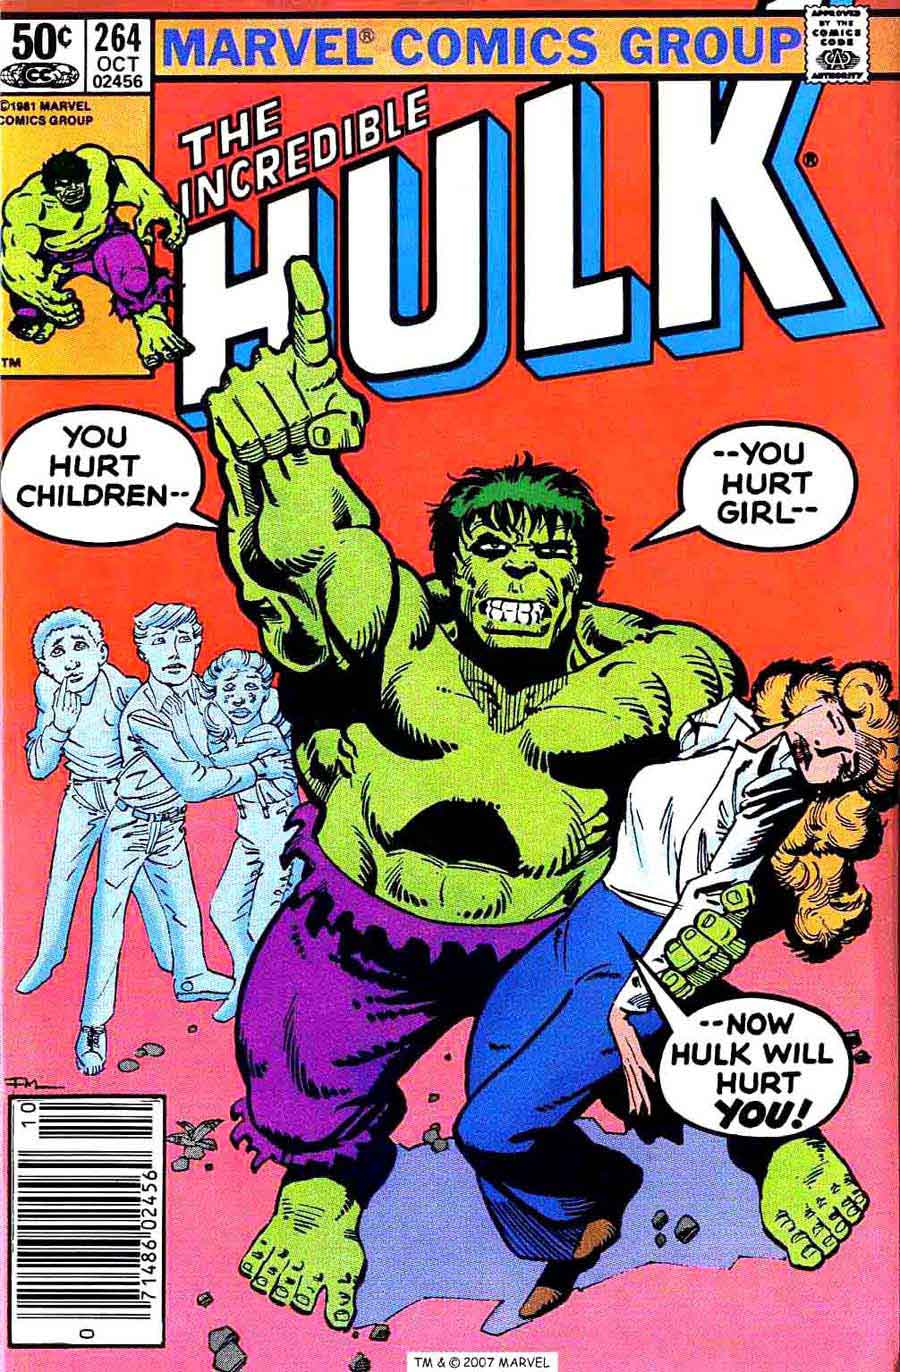 Incredible Hulk v2 #264 marvel 1980s comic book cover art by Frank Miller